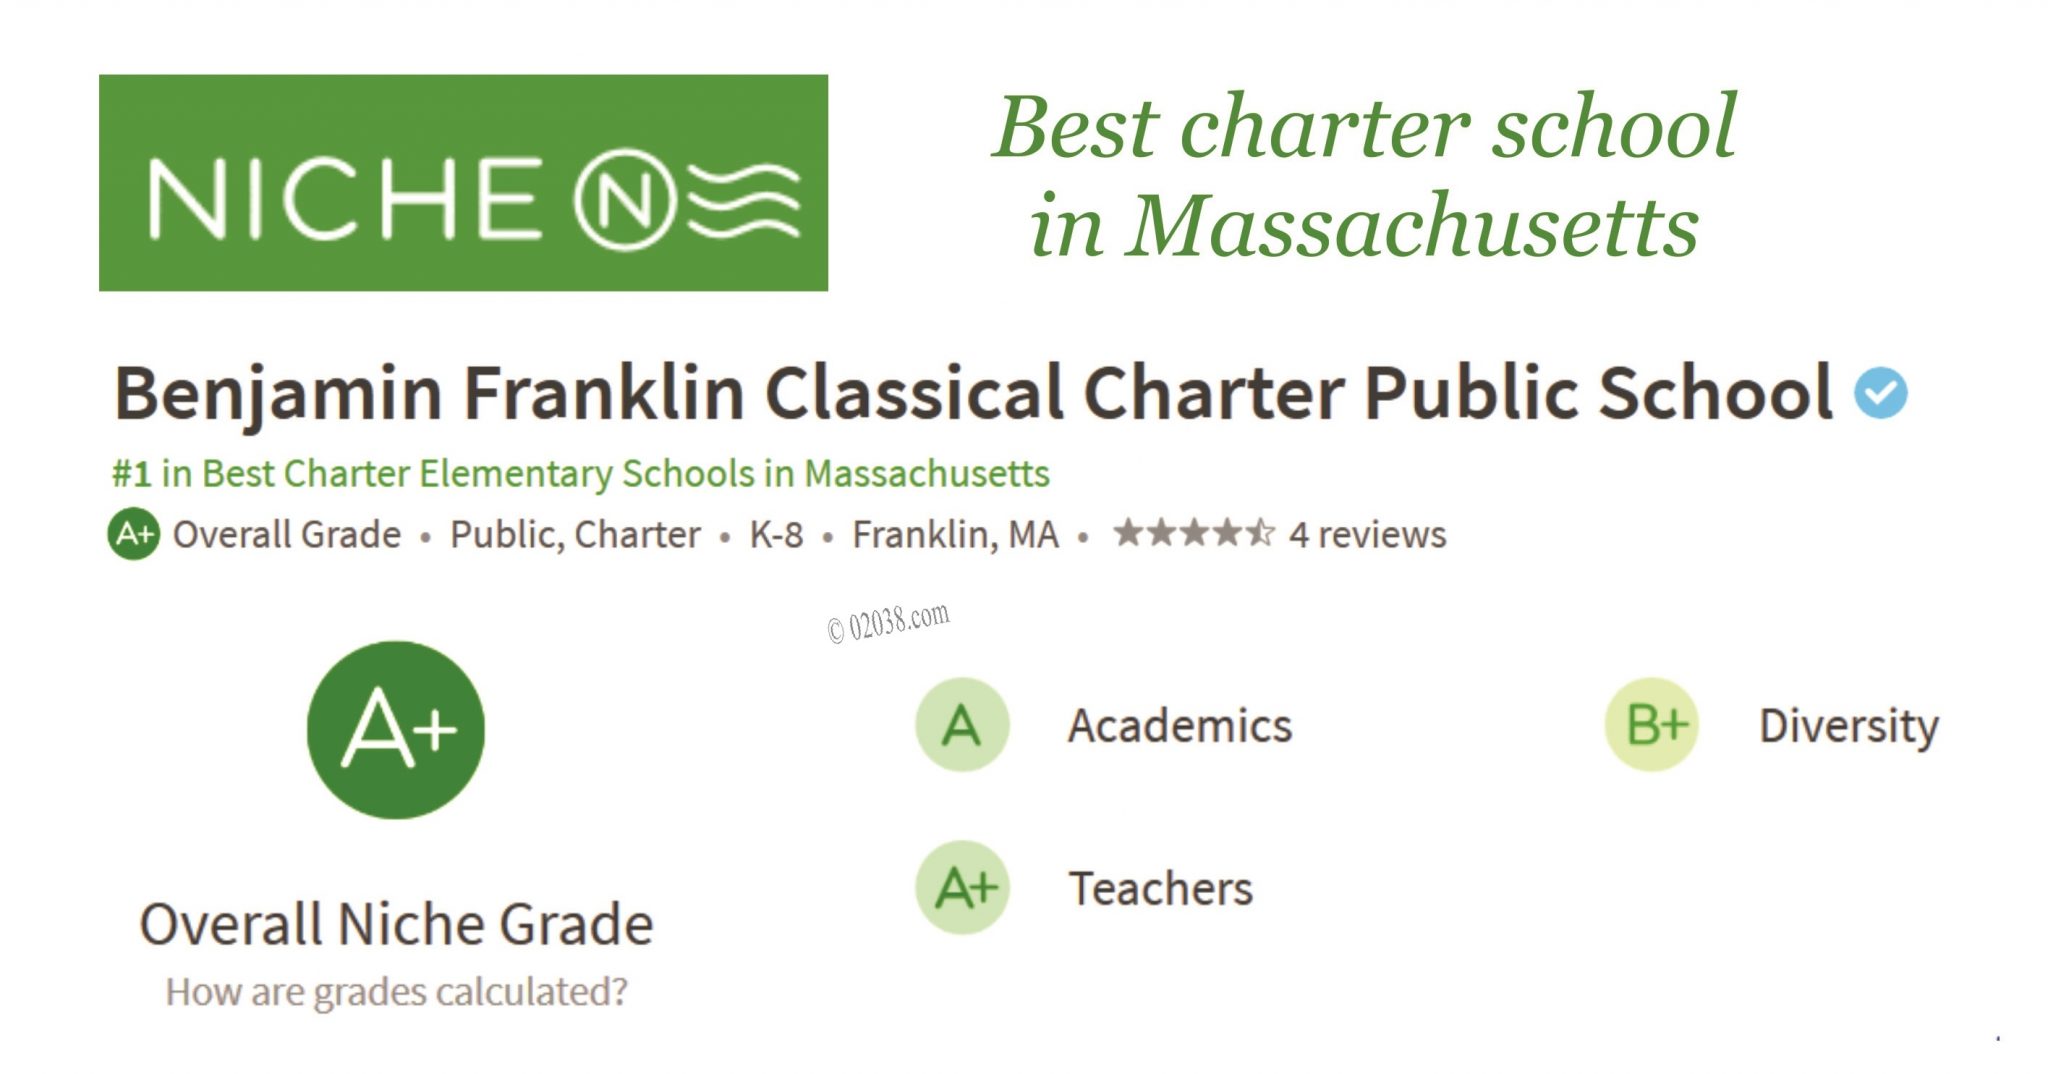 Benjamin Franklin Classical Charter